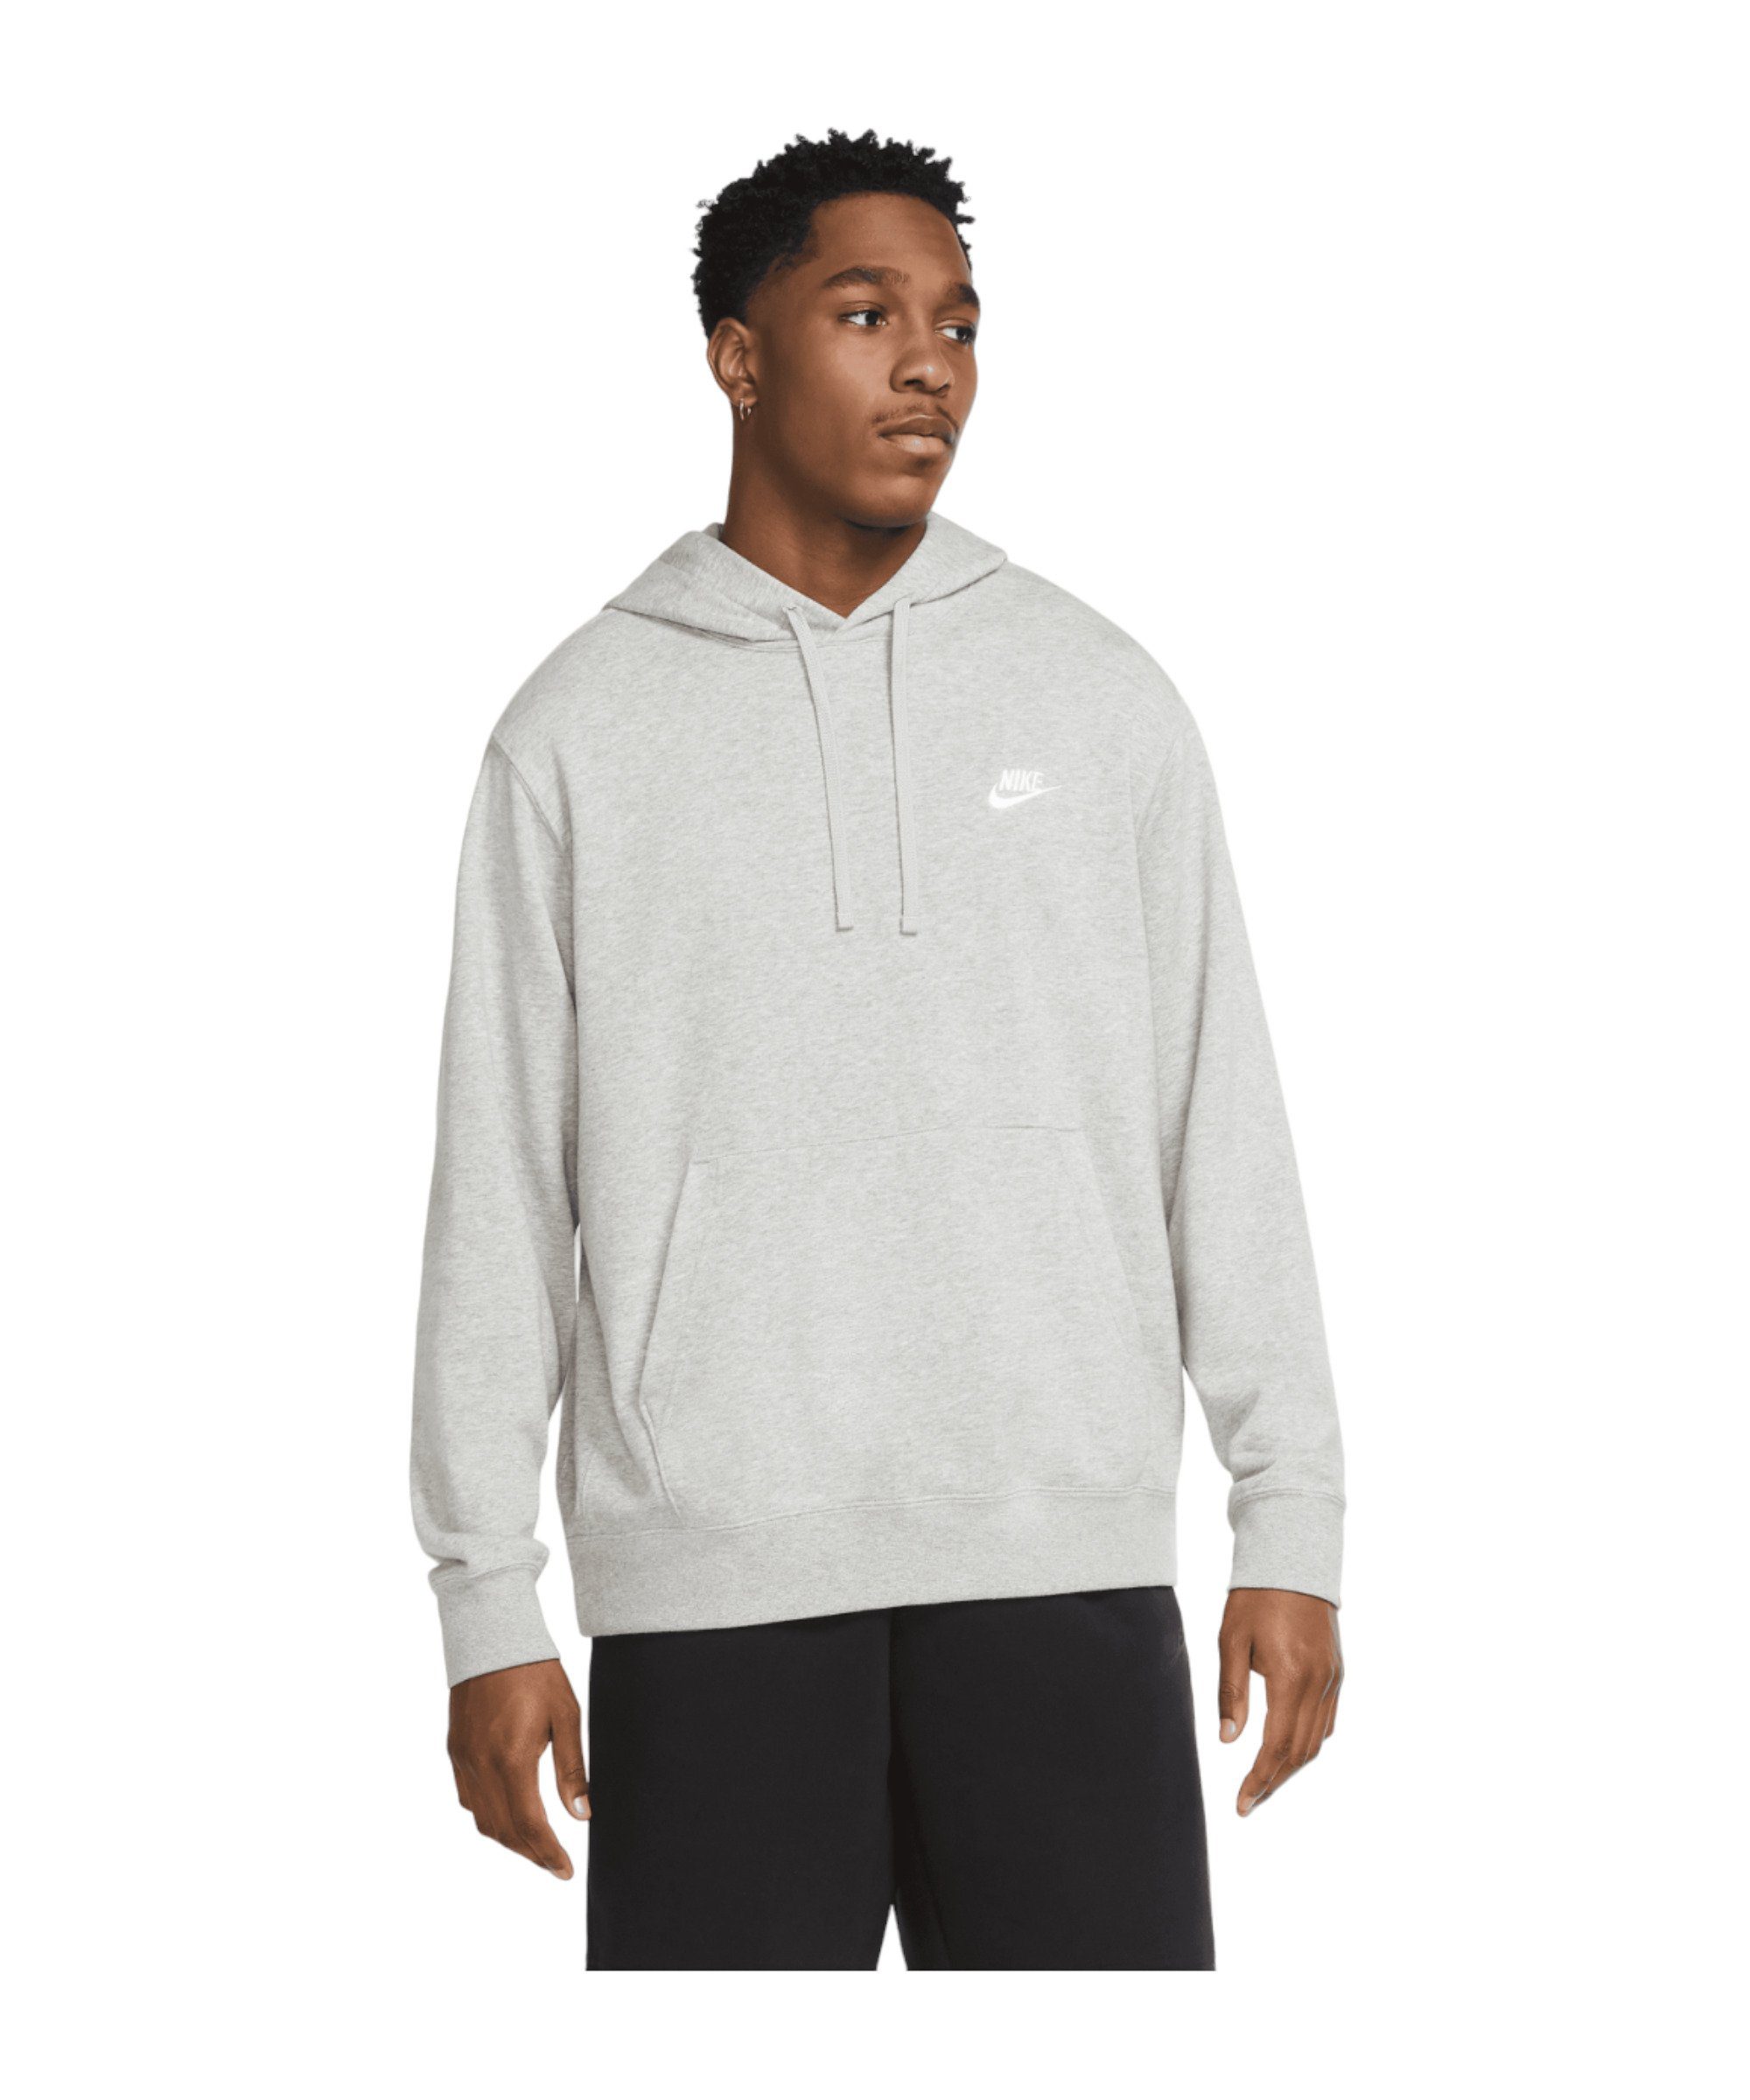 Nike Sportswear Sweatshirt grau Hoody Club